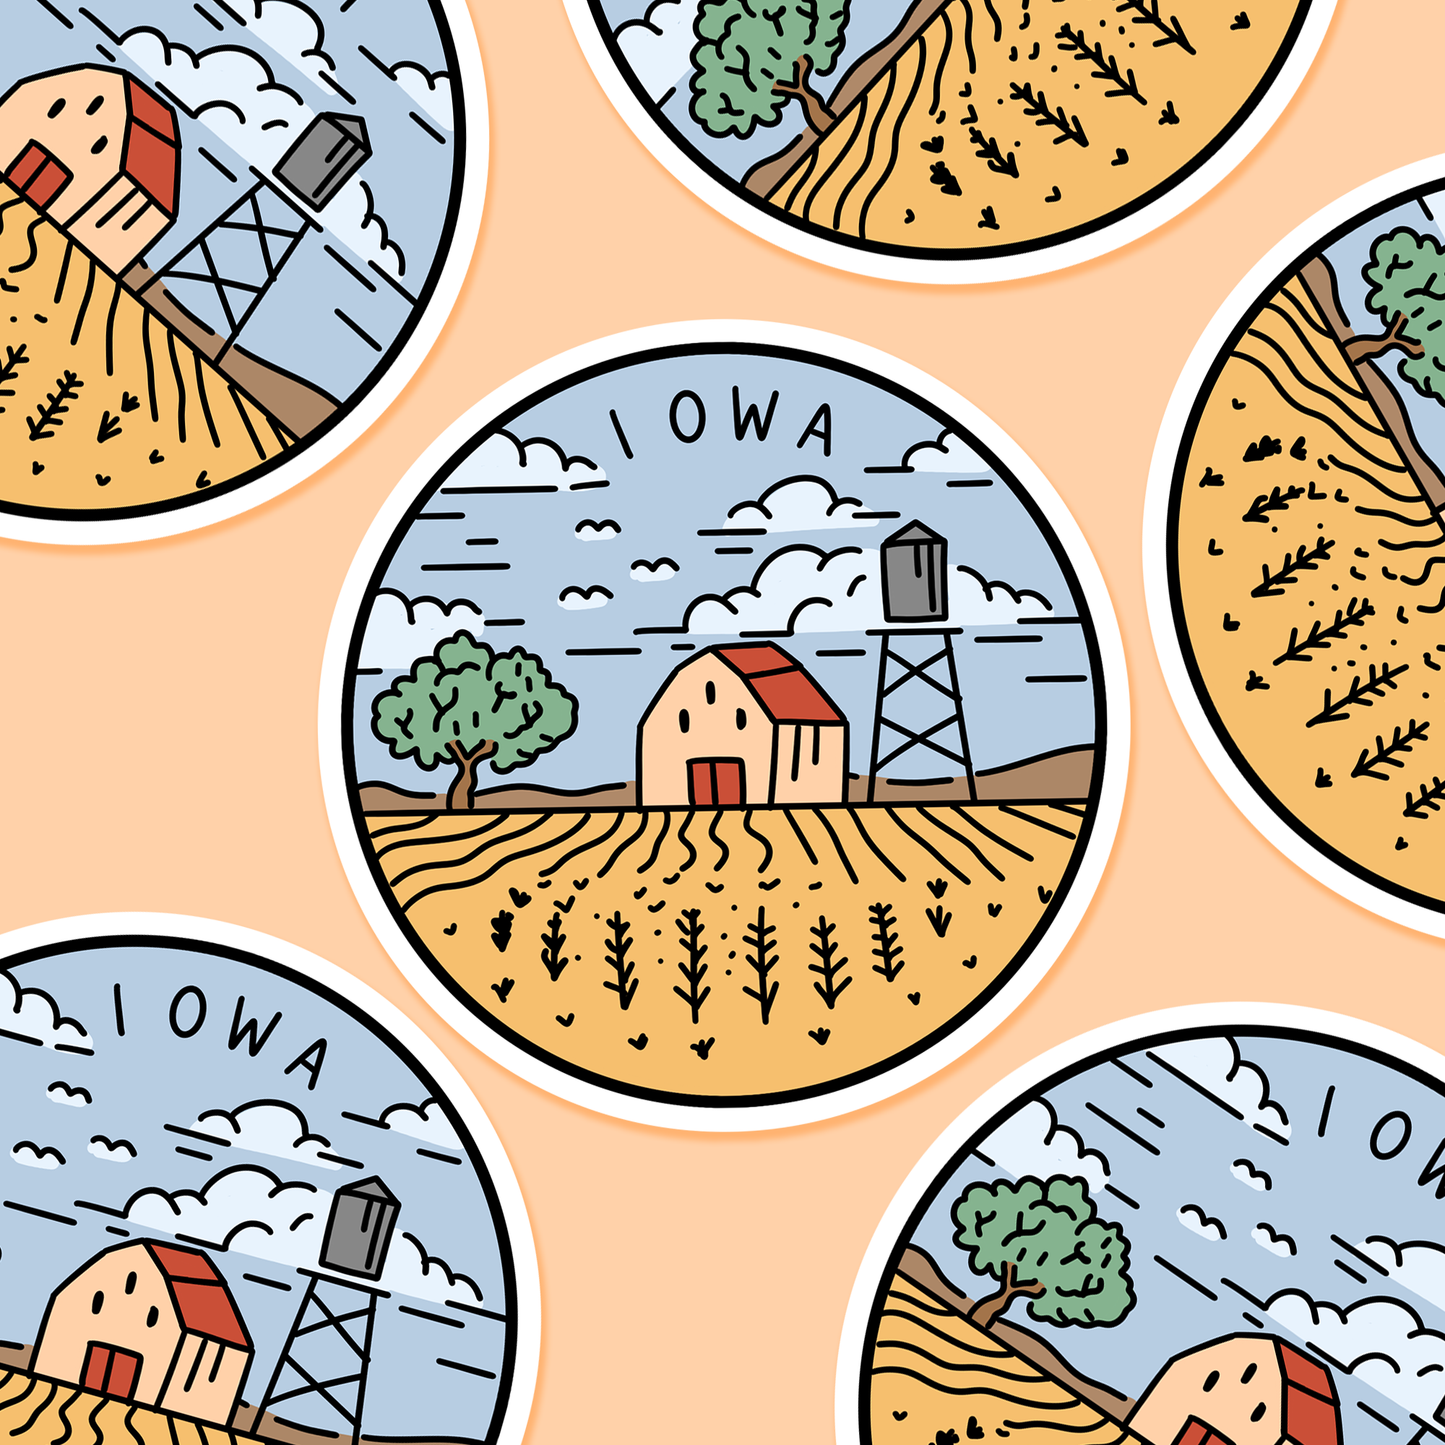 Iowa Illustrated US State 3 x 3 in - Travel Sticker